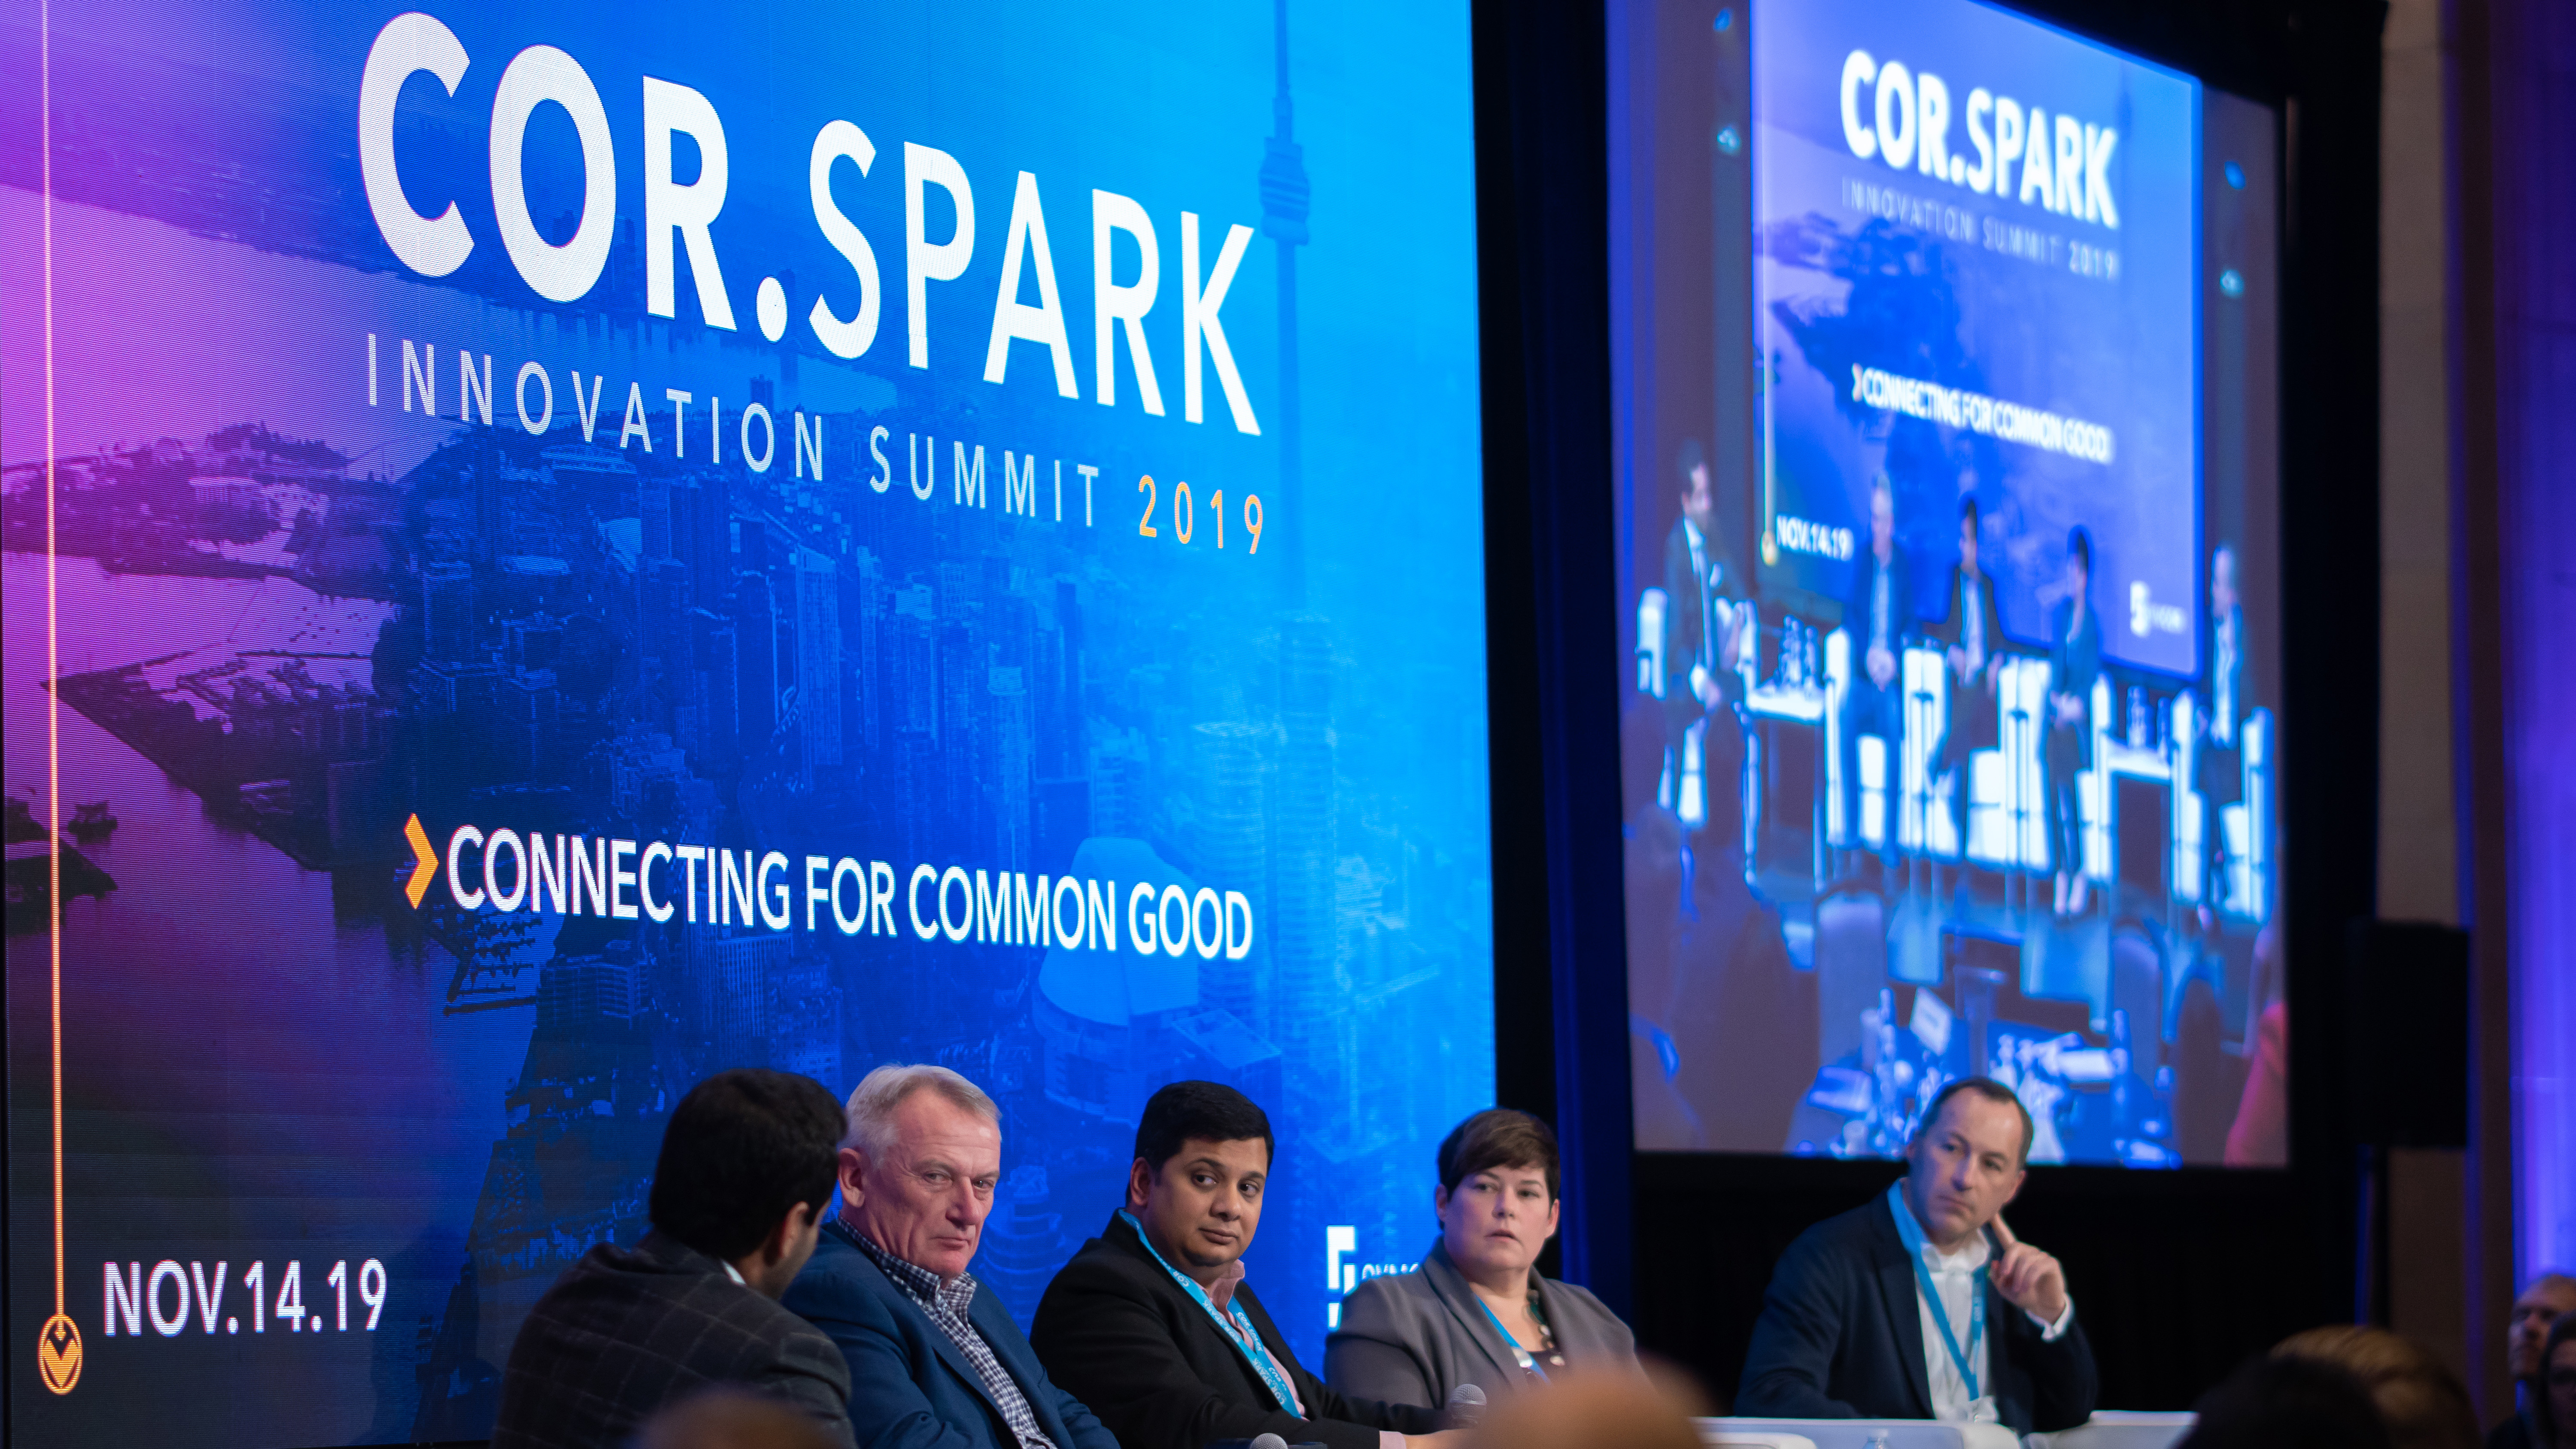 COR.SPARK Innovation Summit